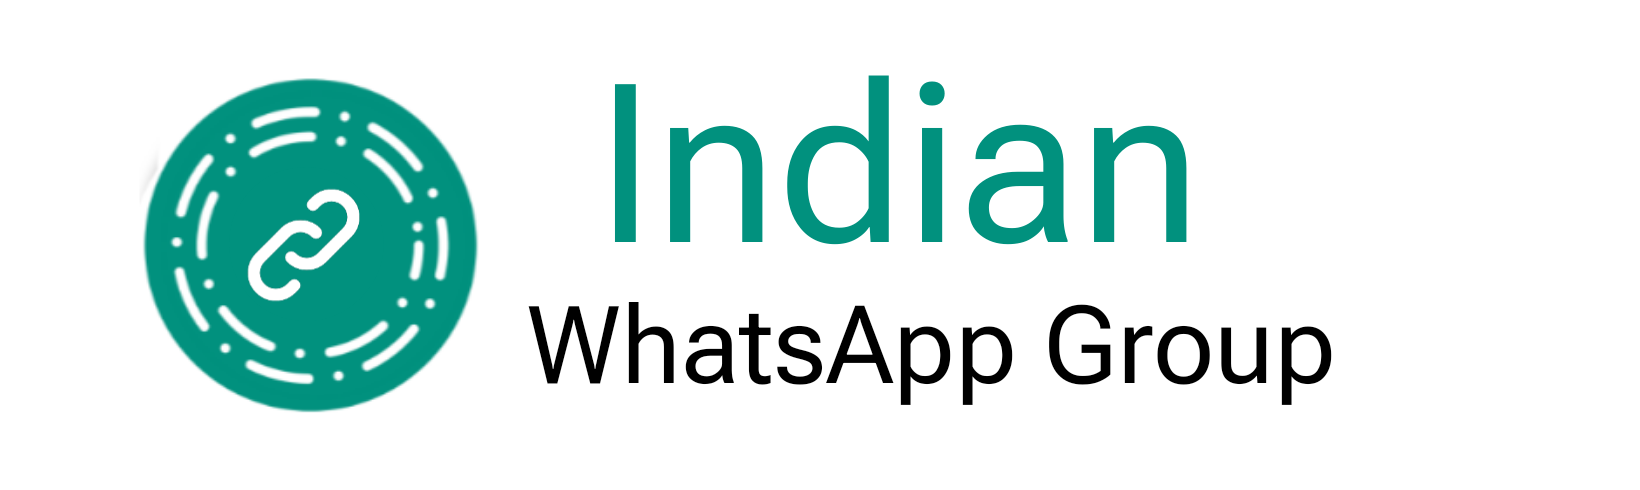 India WhatsApp Group